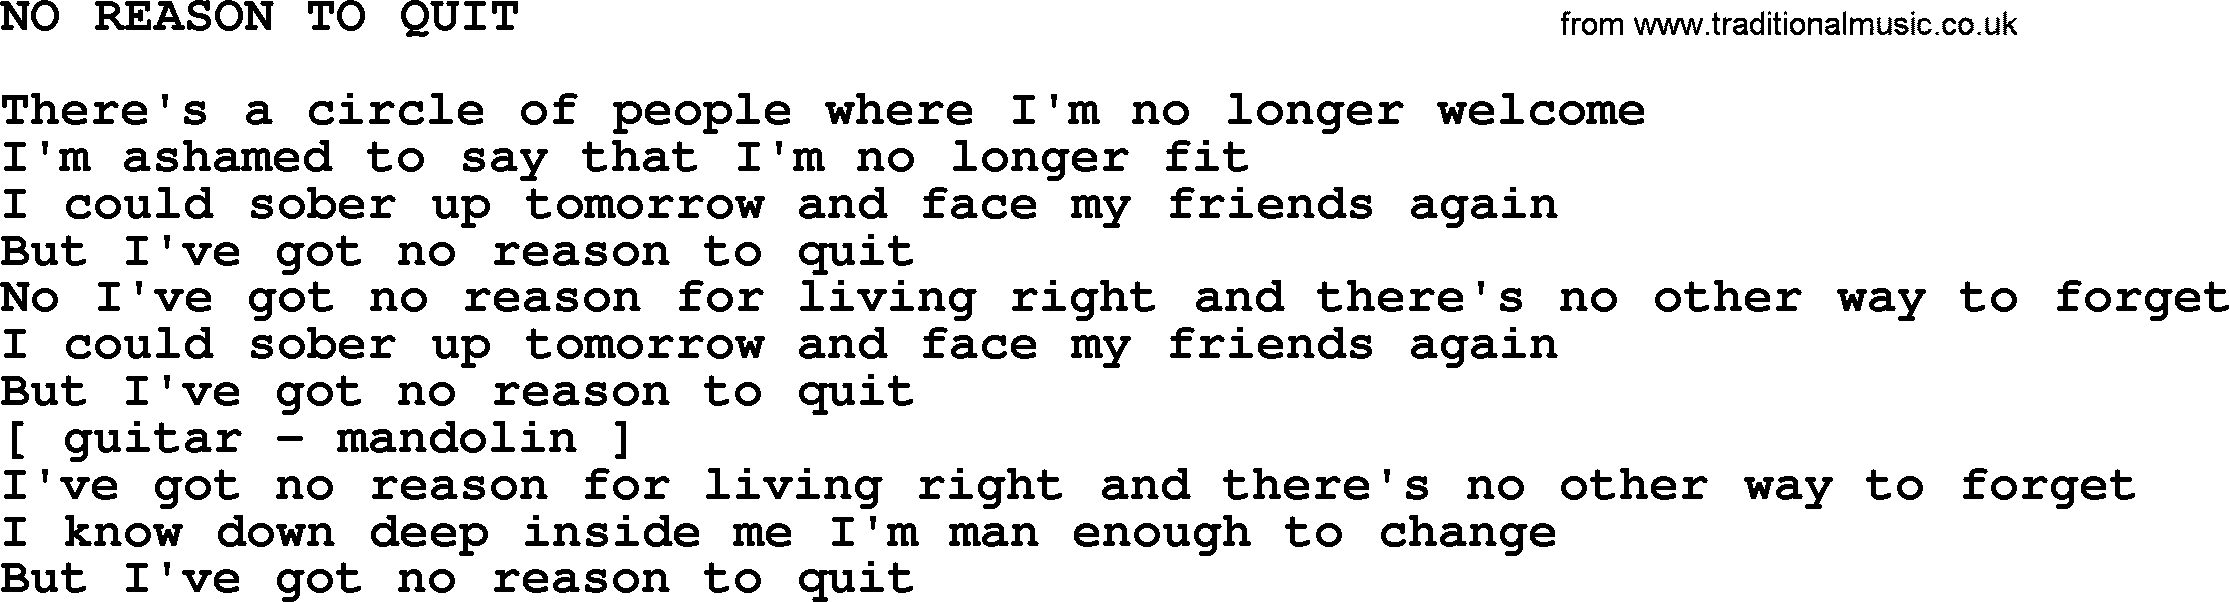 Merle Haggard song: No Reason To Quit, lyrics.